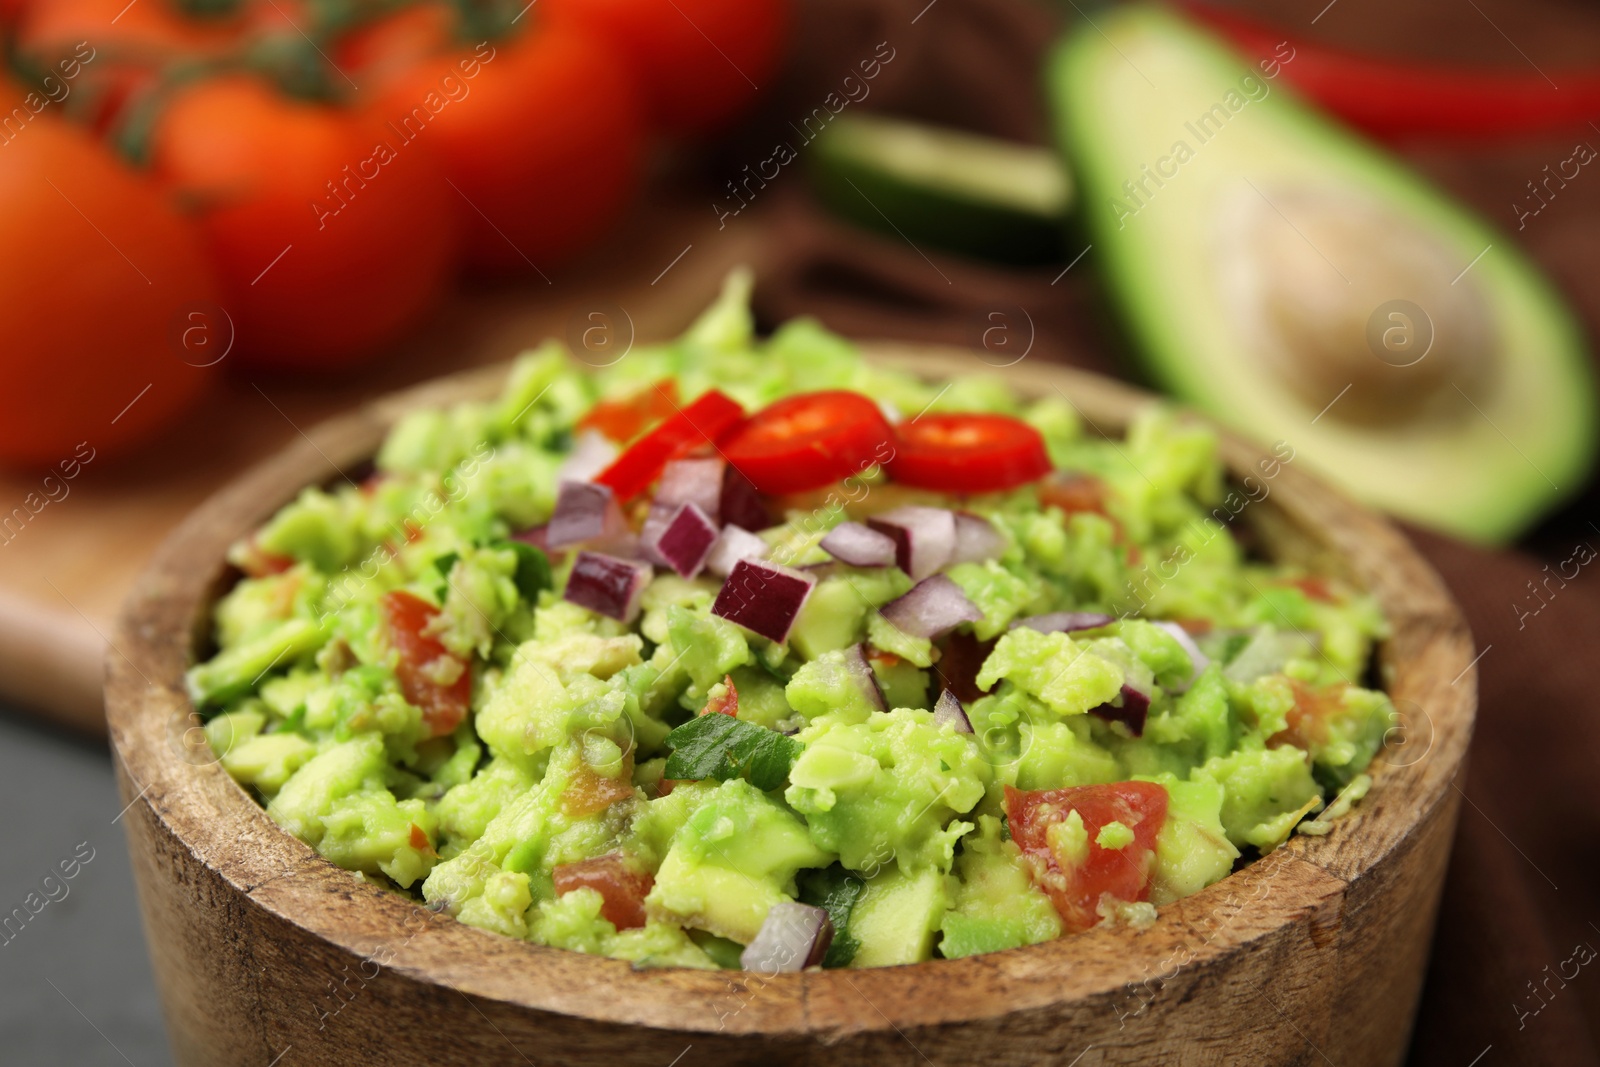 Photo of Delicious guacamole in wooden bowl, closeup view